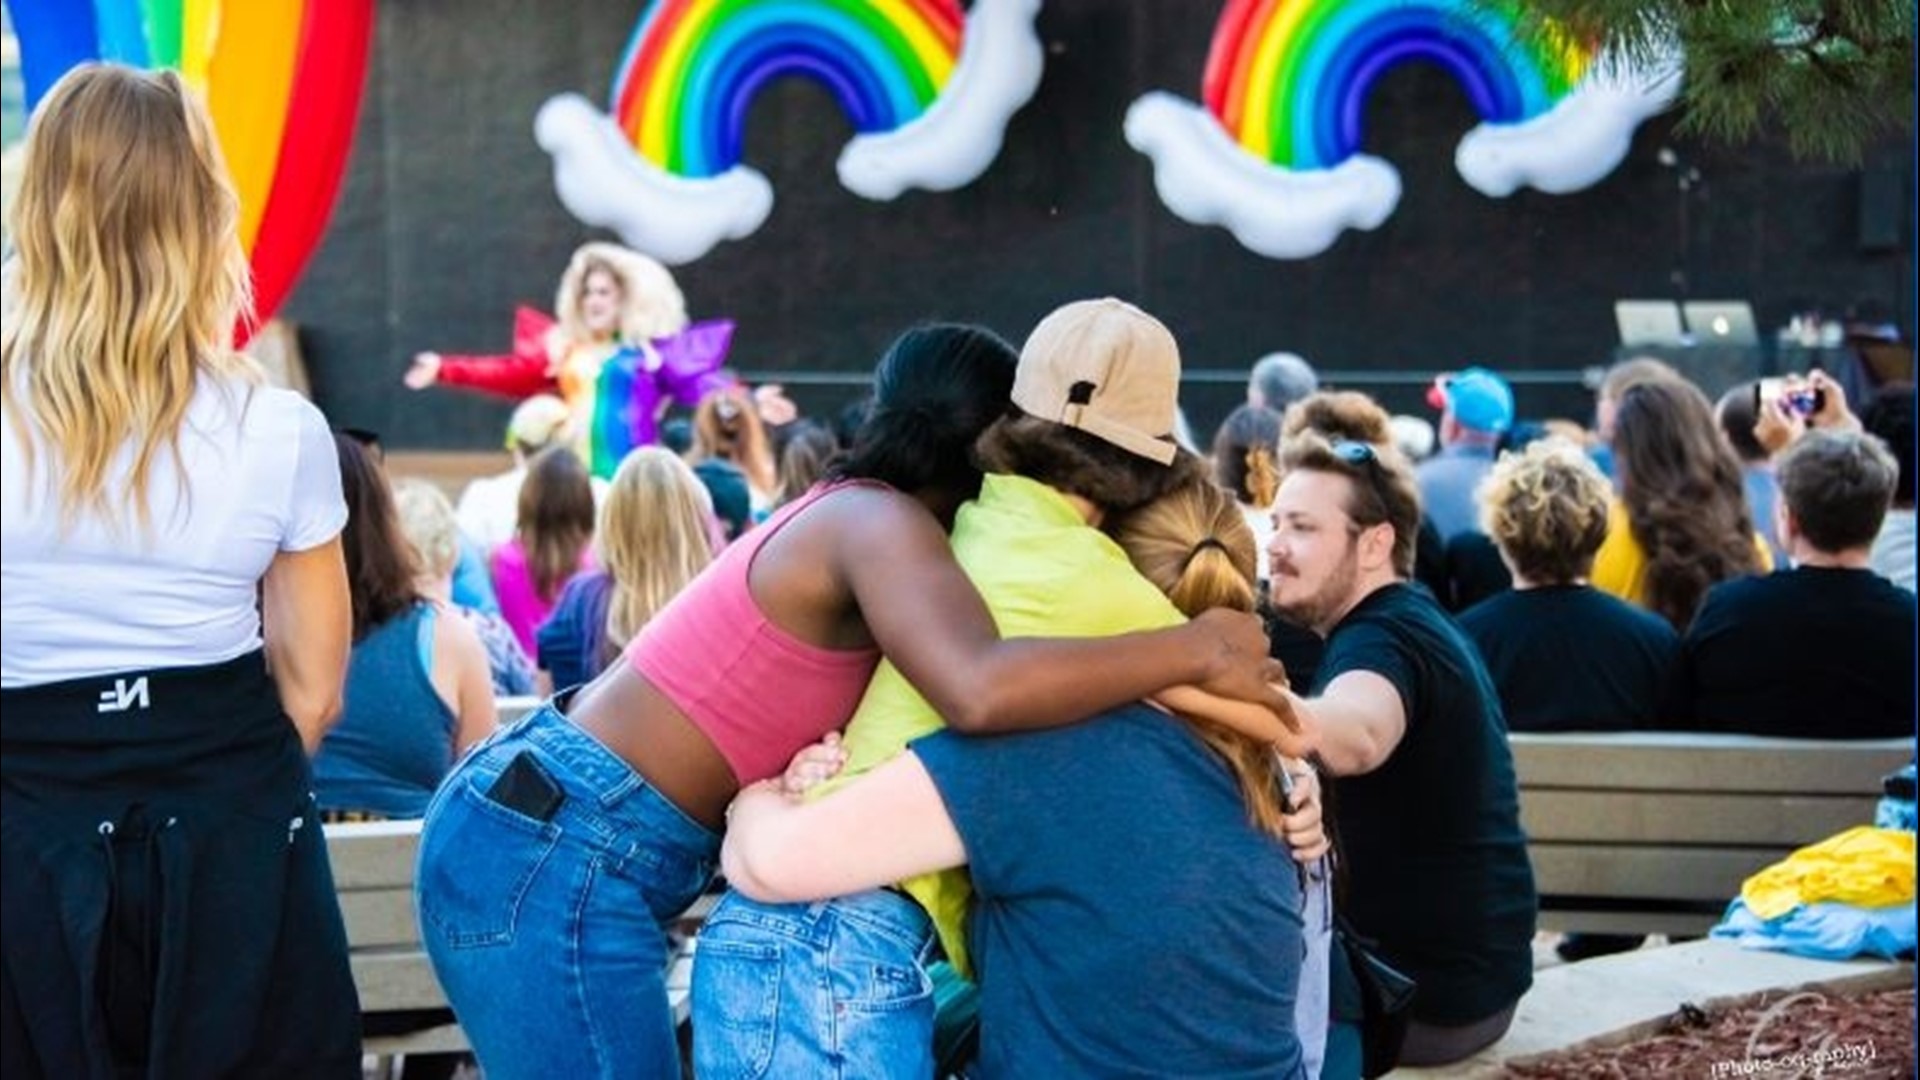 Protesters disrupt drag show at Douglas County Colorado PrideFest